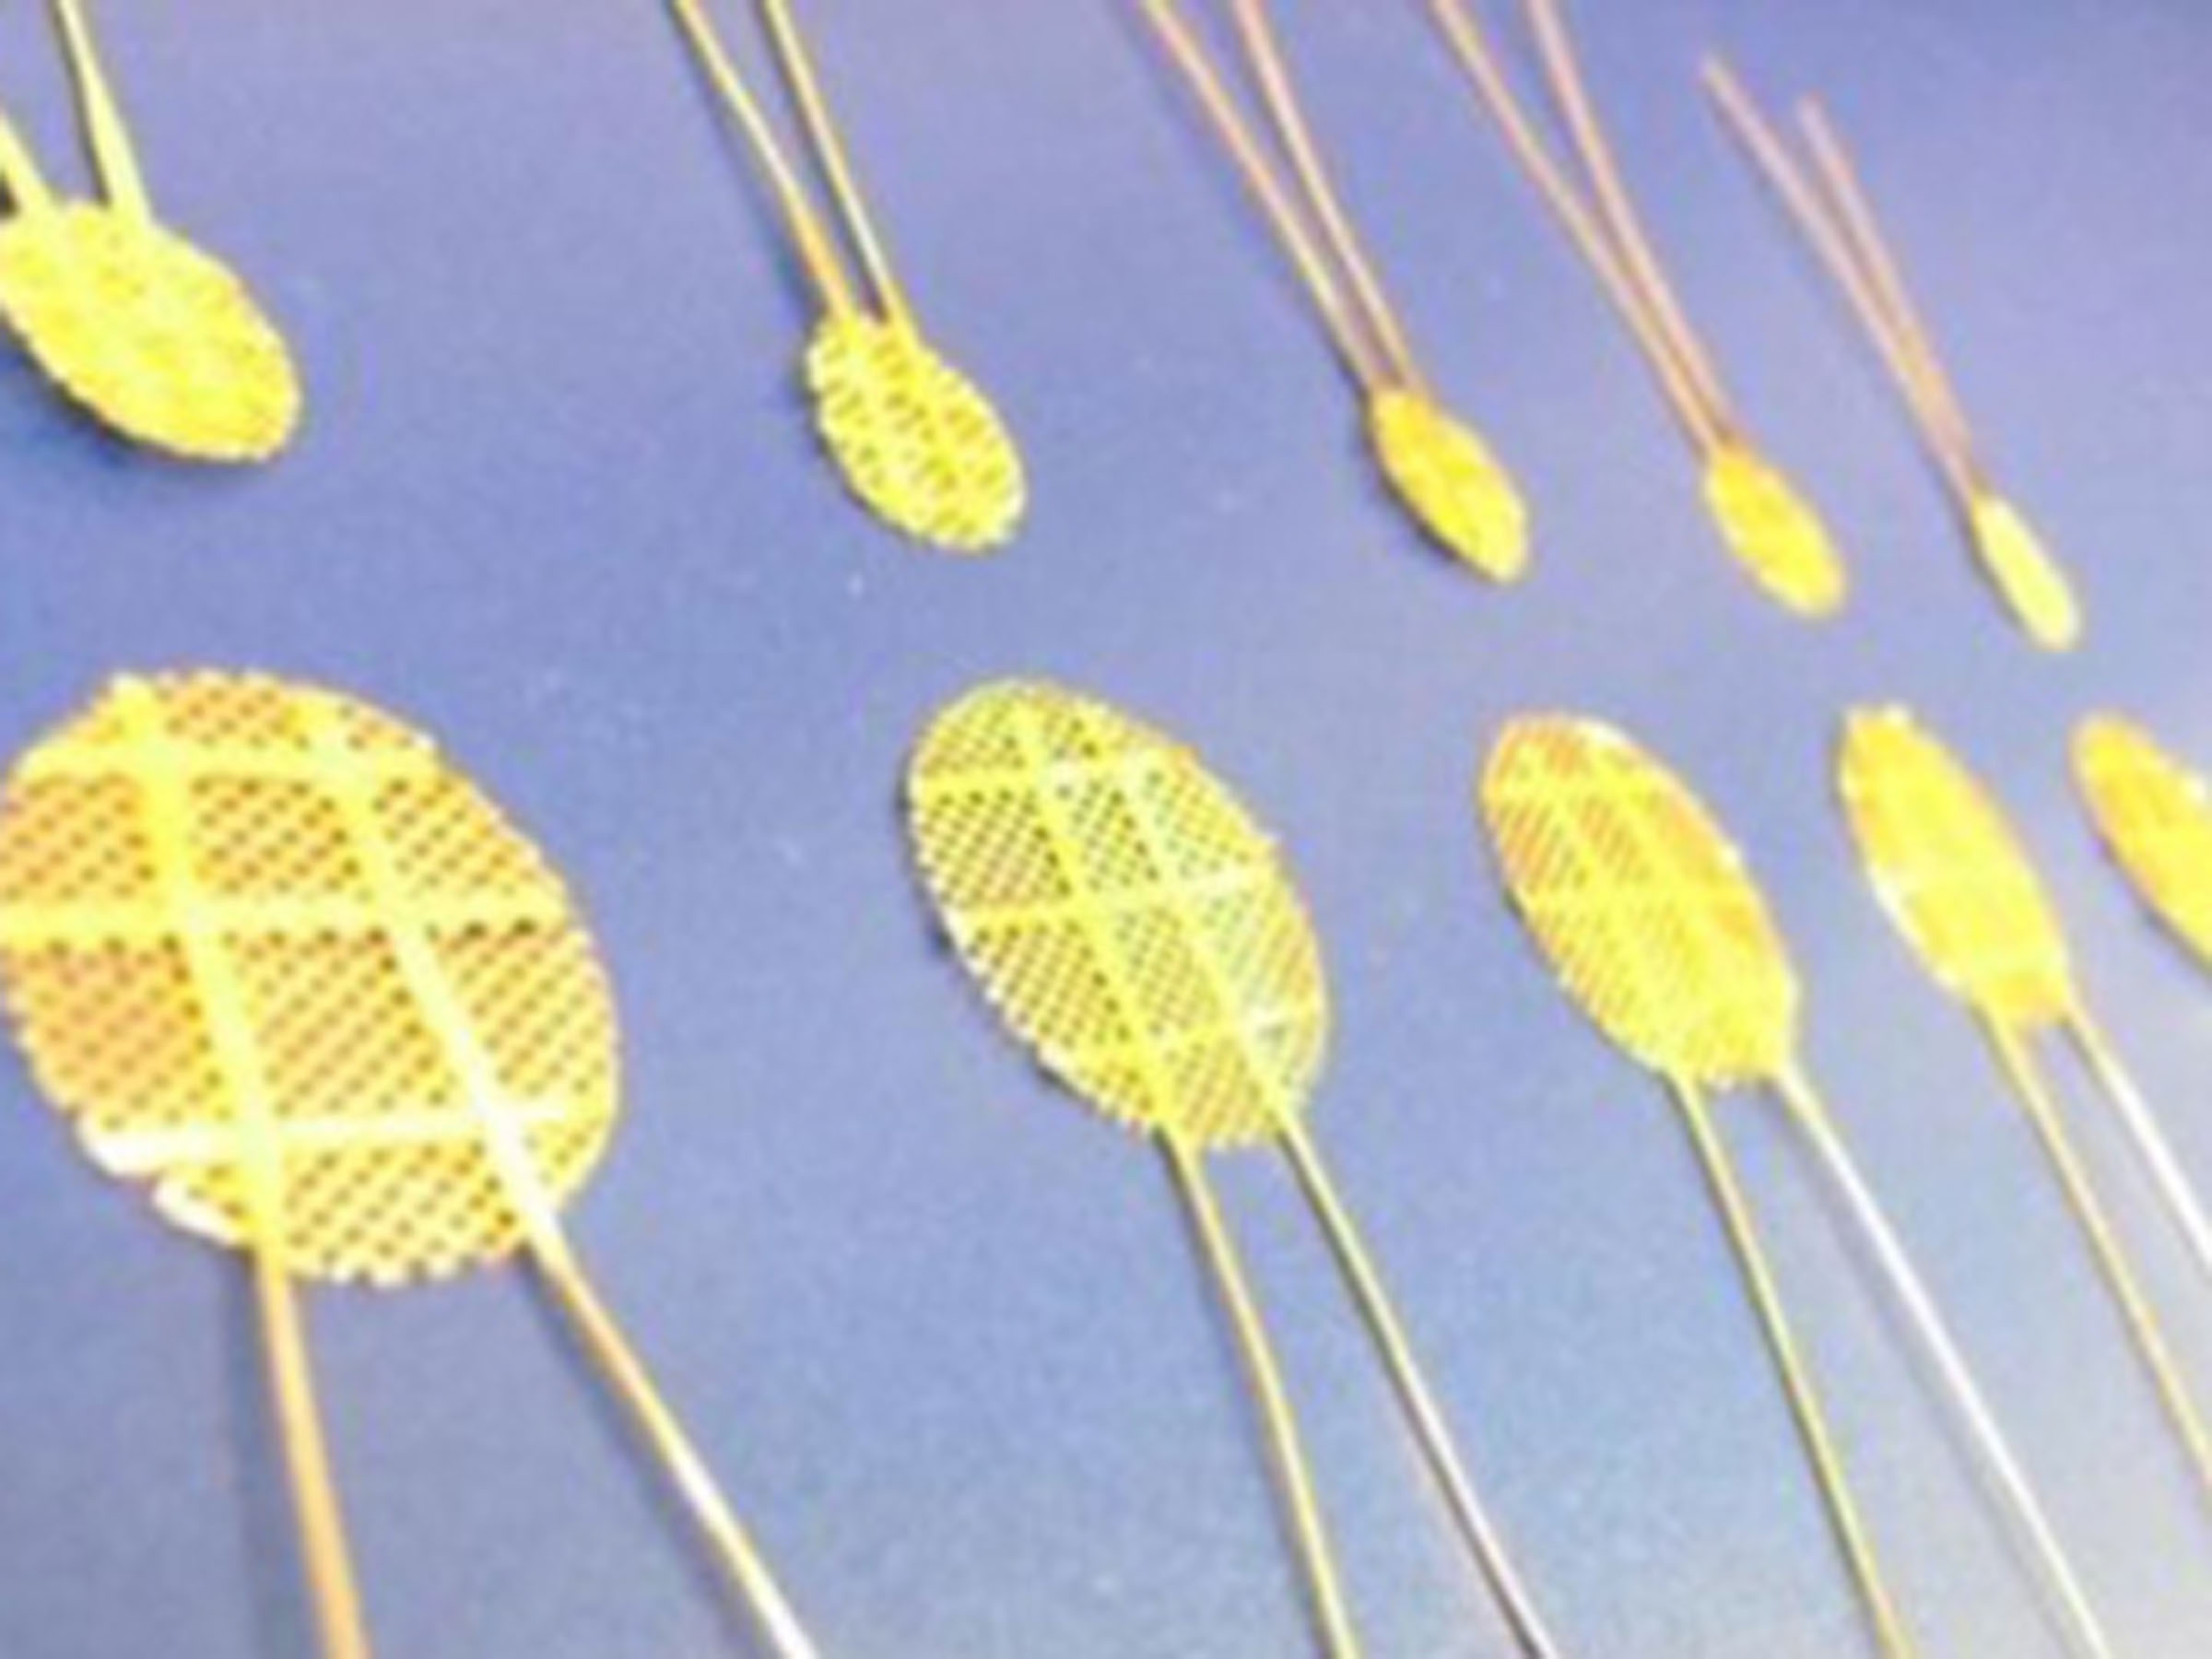 Gold-grid-1-mesh-gauze-platinum-SOFC-PEM-wet-electrochemistry-counter-electrodes-fuel-cell-wire-fil-platine-pt-or-au-toile-tissu-manufacturer-fabricant-supplier-heraeus-advent-goodfellows-AlfaAesar-.jpg